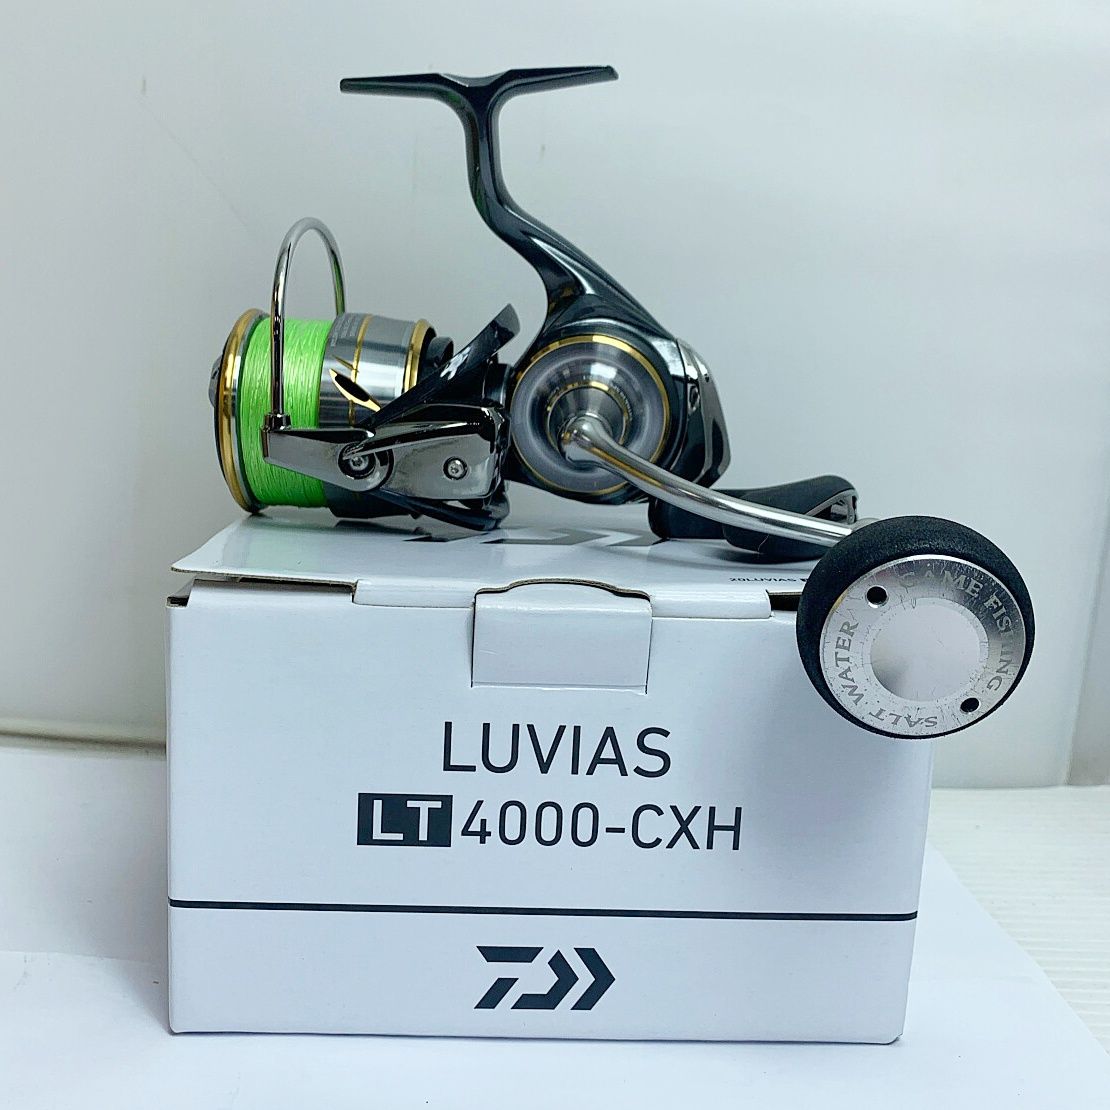 DAIWA ダイワ 20ルビアスLT 4000-CXH スピニングリール 021114 - メルカリ